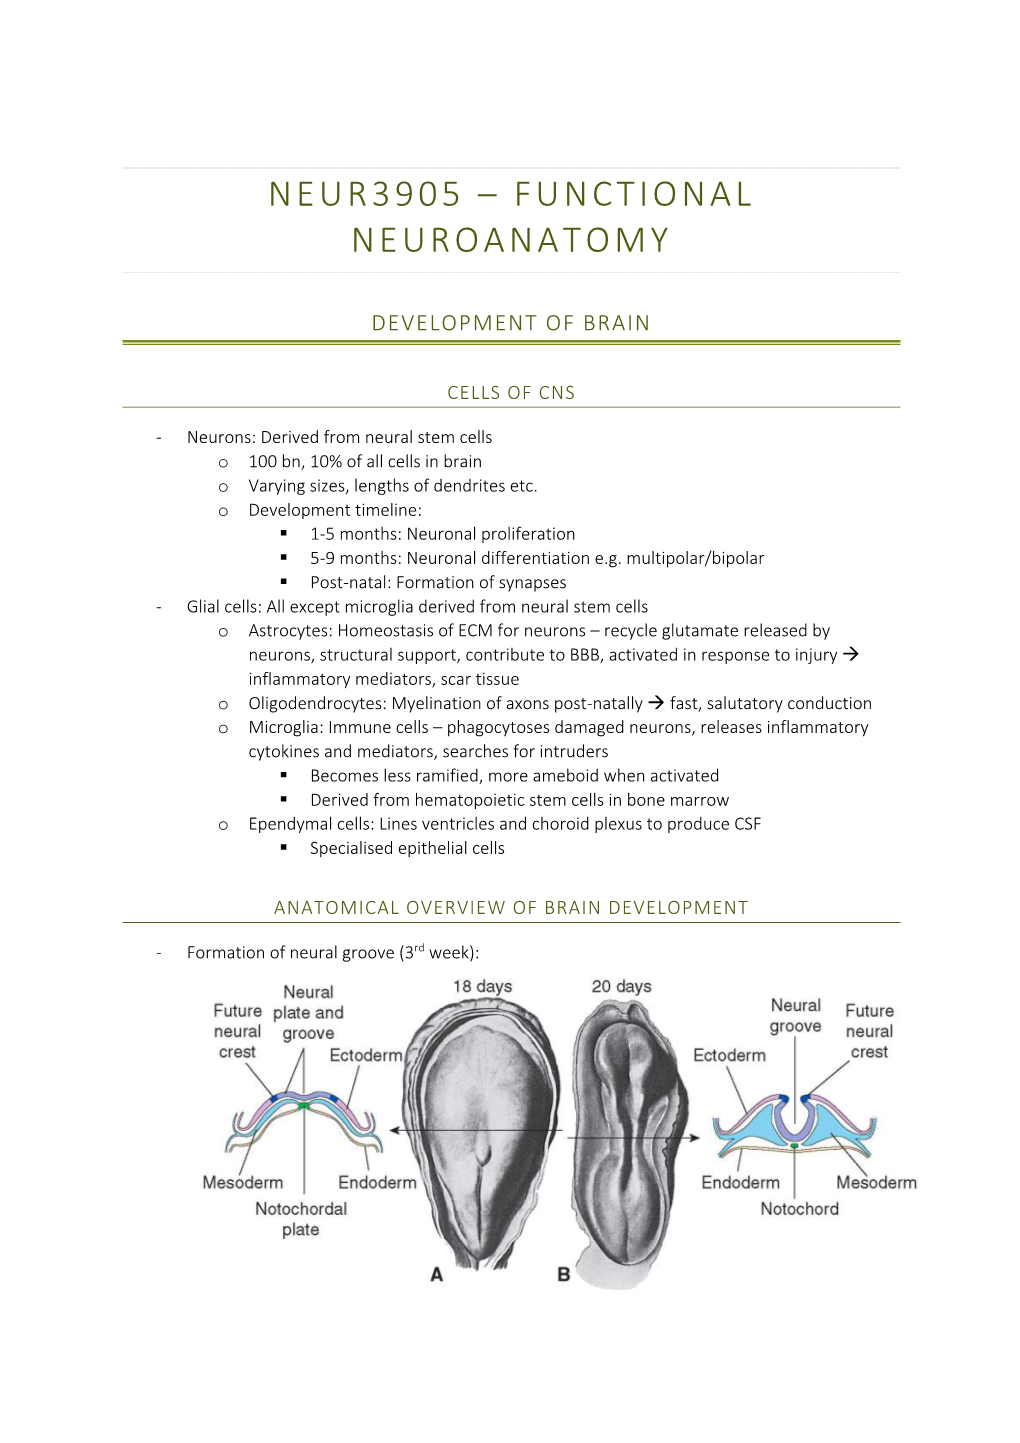 Neur3905 – Functional Neuroanatomy